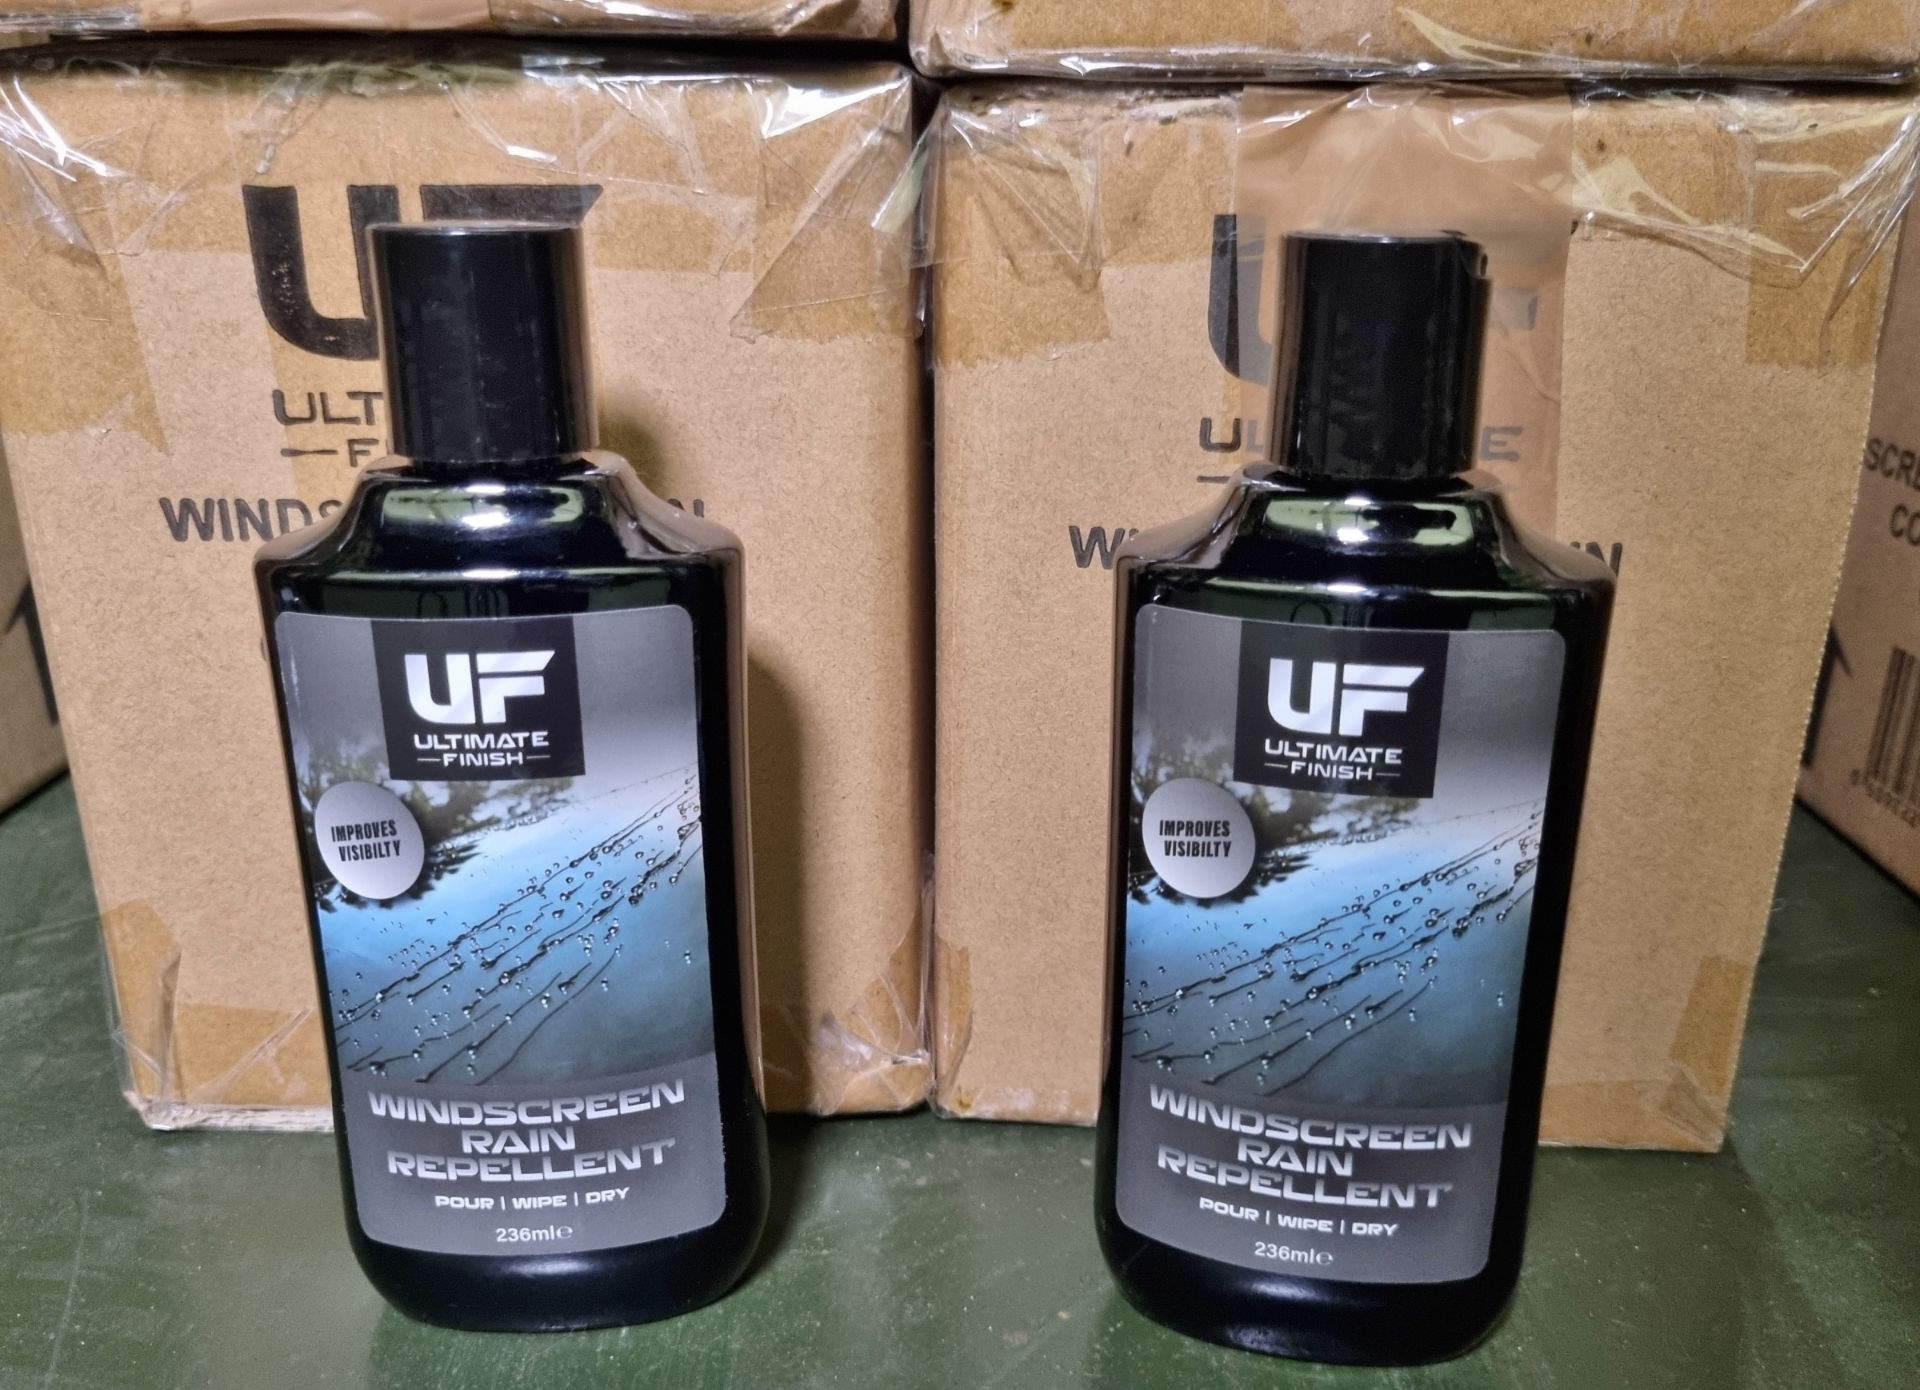 96x bottles of Ultimate Finish windscreen rain repellent - 236ml - Image 4 of 5